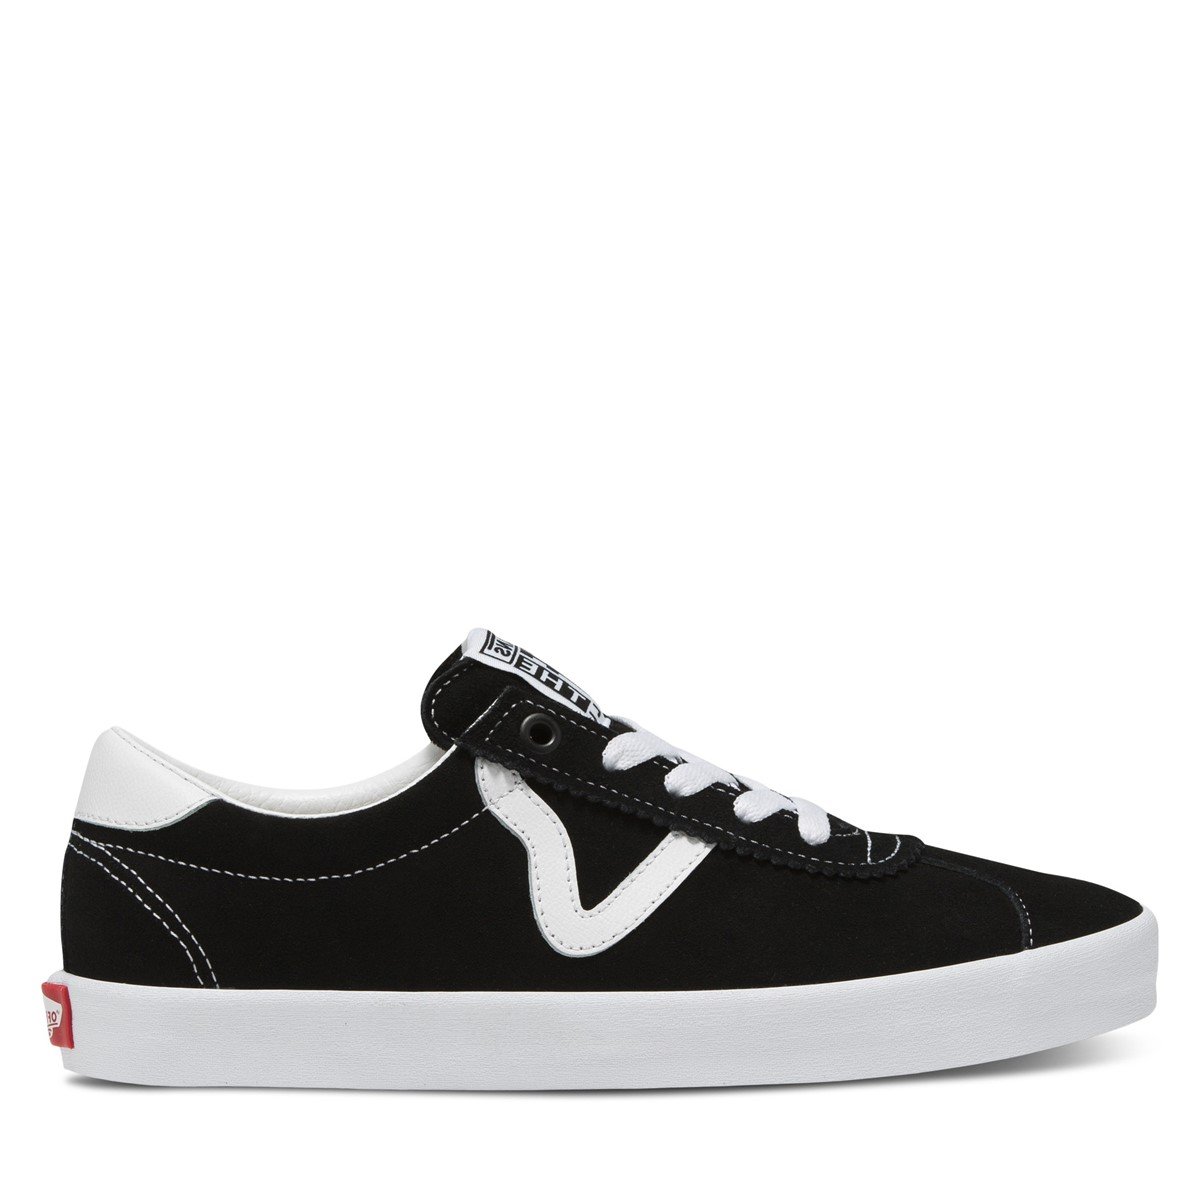 Sport Low Sneakers in Black/White